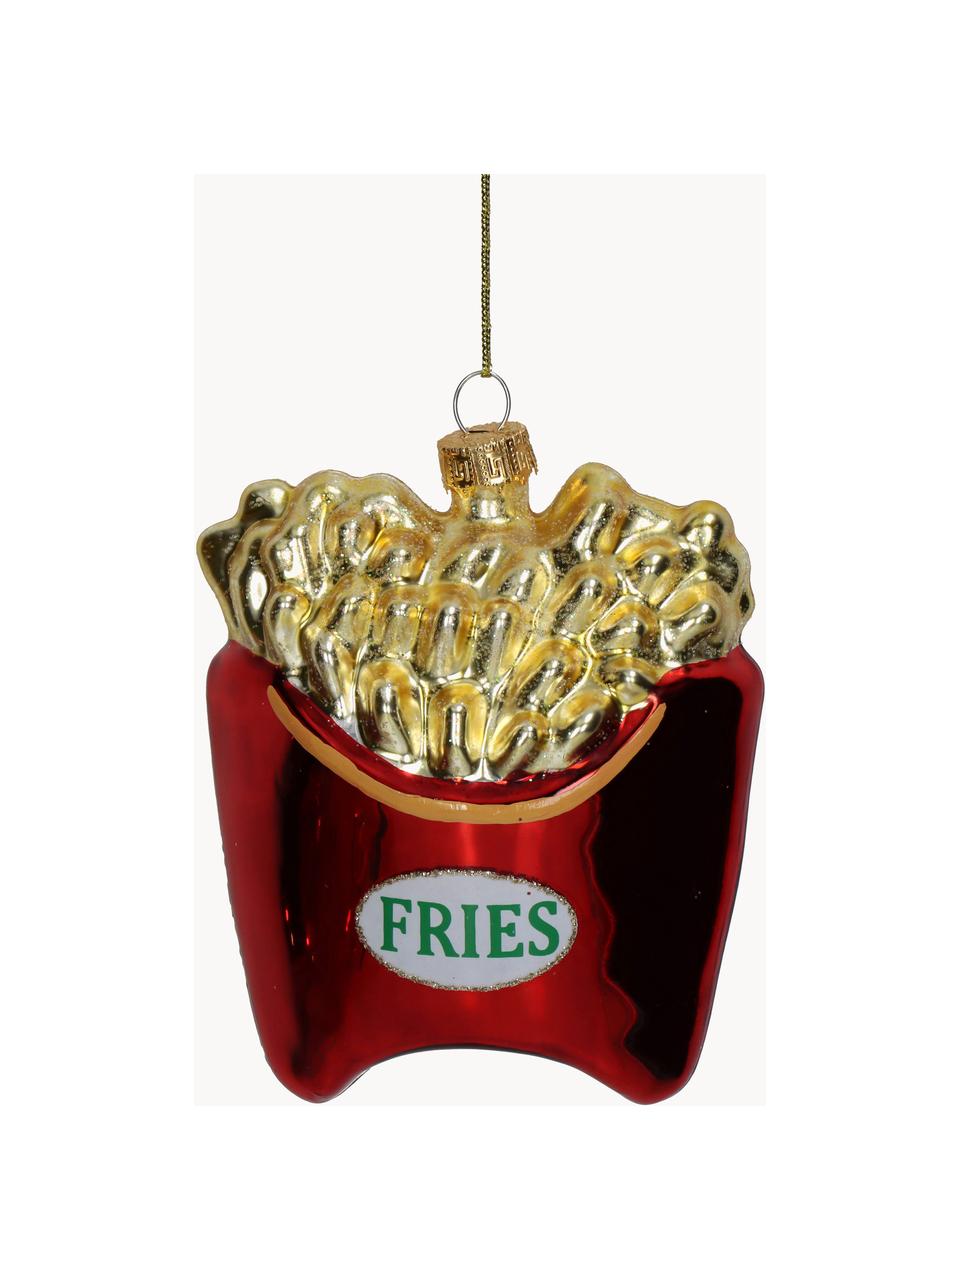 Adorno navideño Fries, Vidrio, Amarillo, rojo, An 9 x Al 11 cm